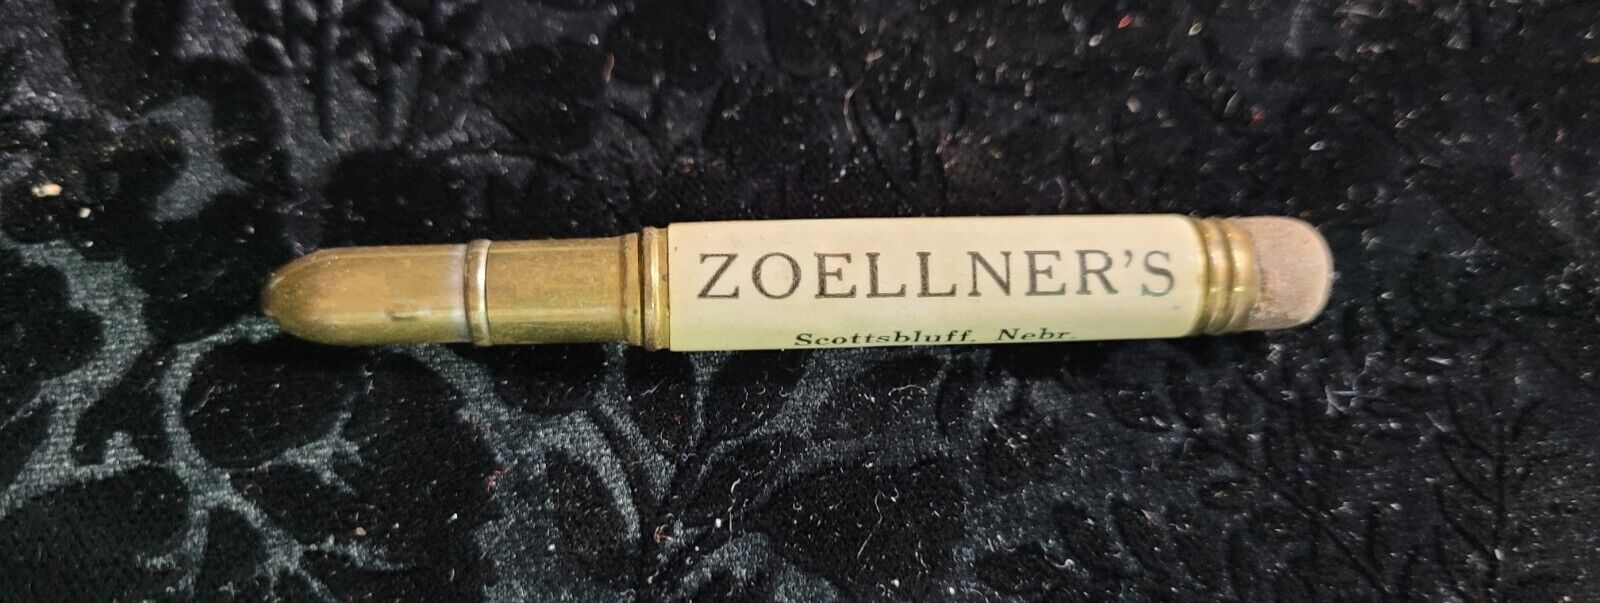 Vintage ZOELLNER\'S SCOTTSBLUFF NEBR. GOOD CLOTHES  Tailor\'s Chalk Pencil